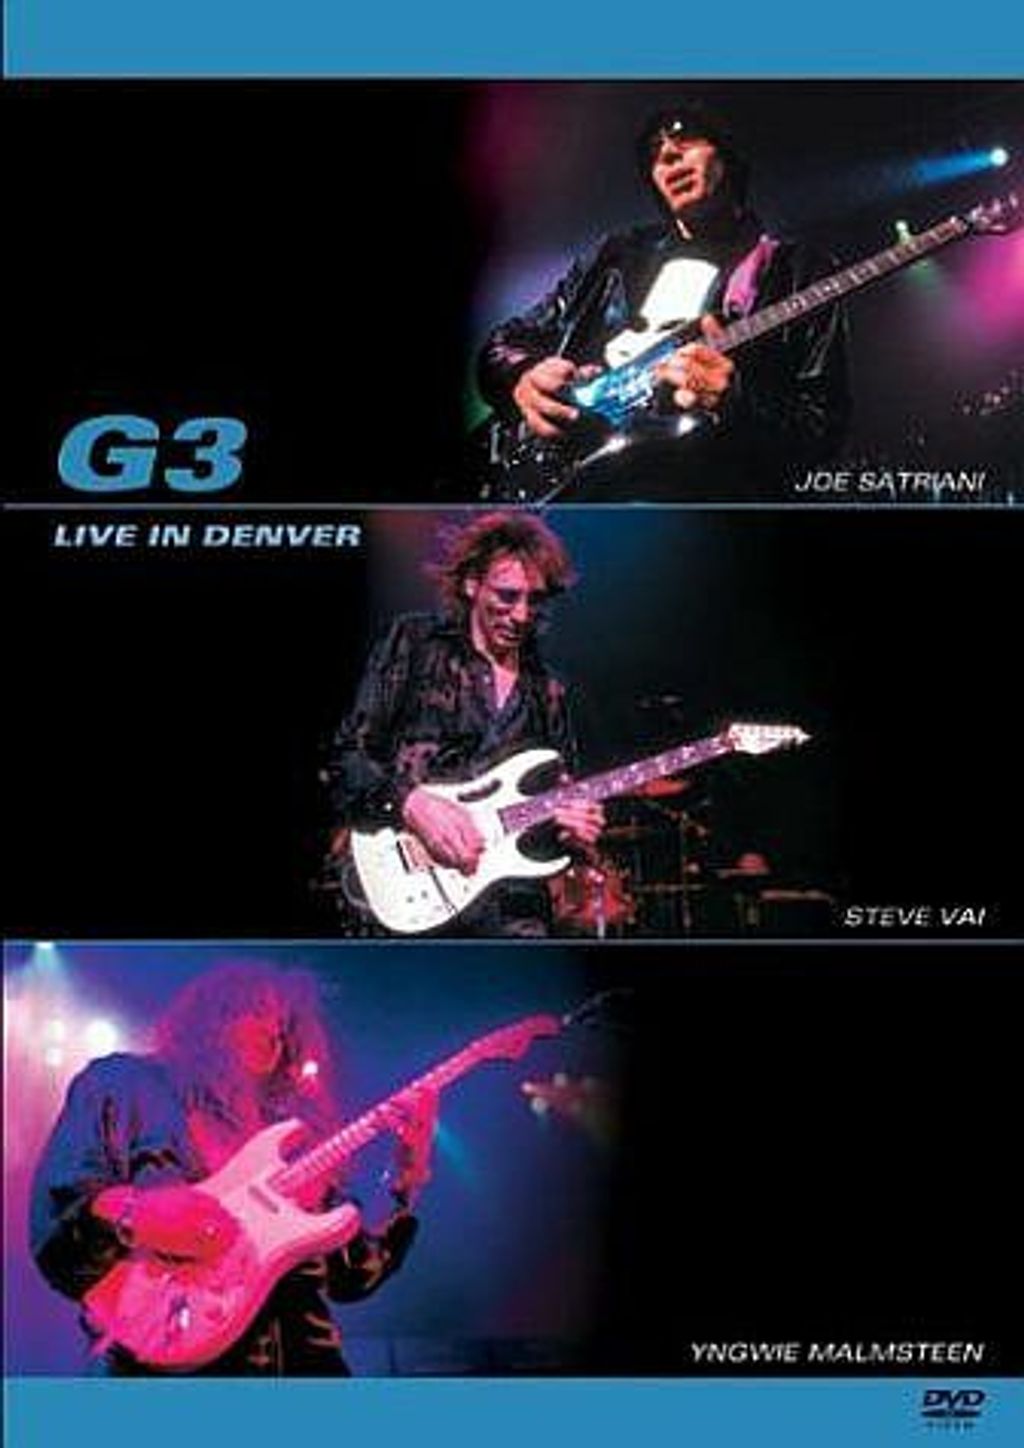 JOE SATRIANI, STEVE VAI, YNGWIE MALMSTEEN G3 Live In Denver DVD.jpg